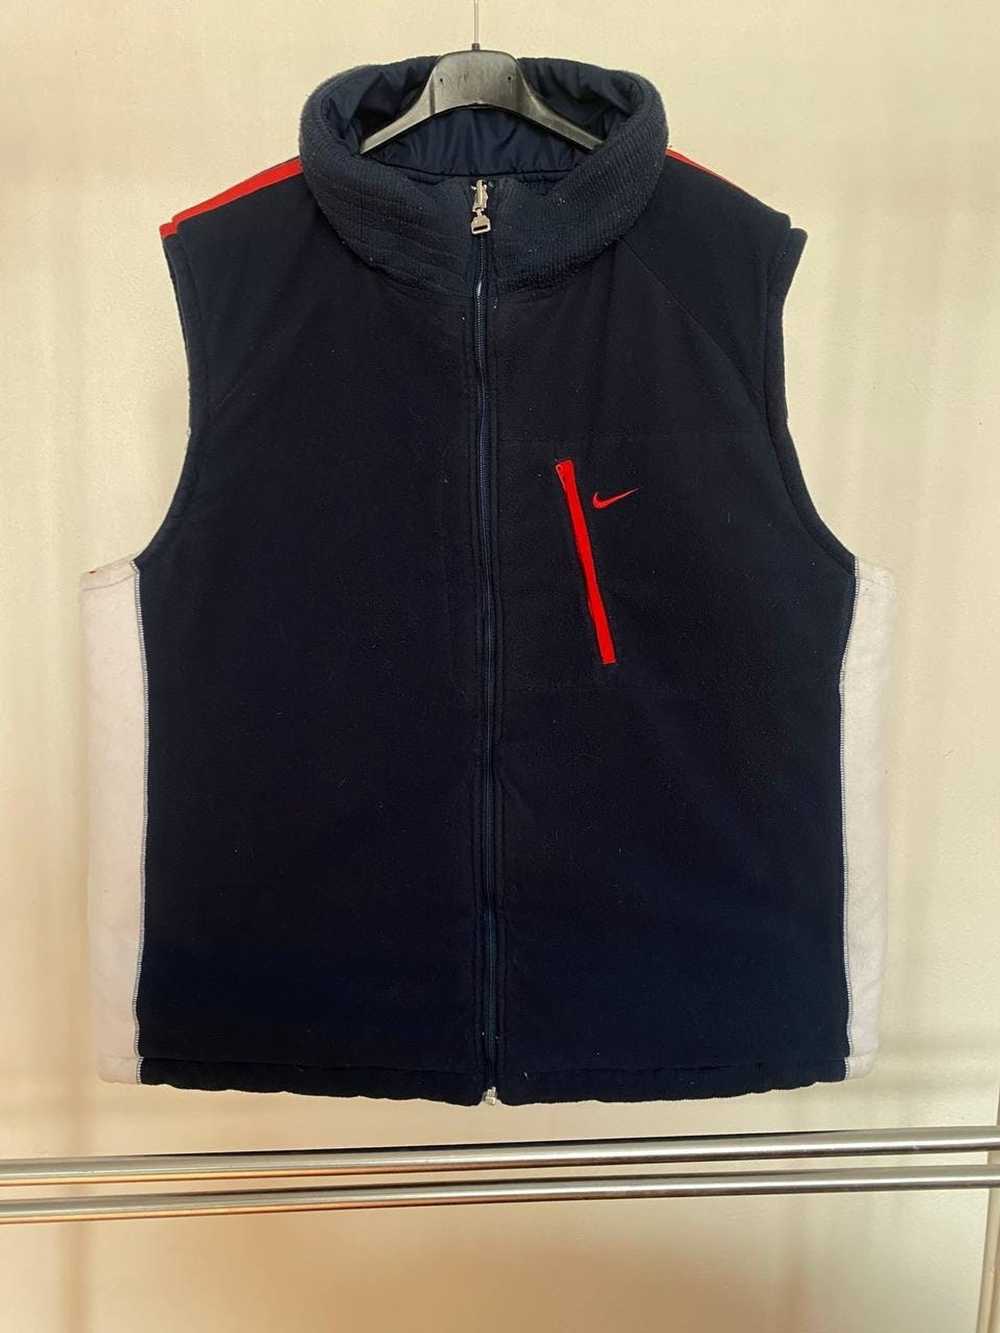 Nike × Streetwear × Vintage Vintage 90s nike vest - image 9